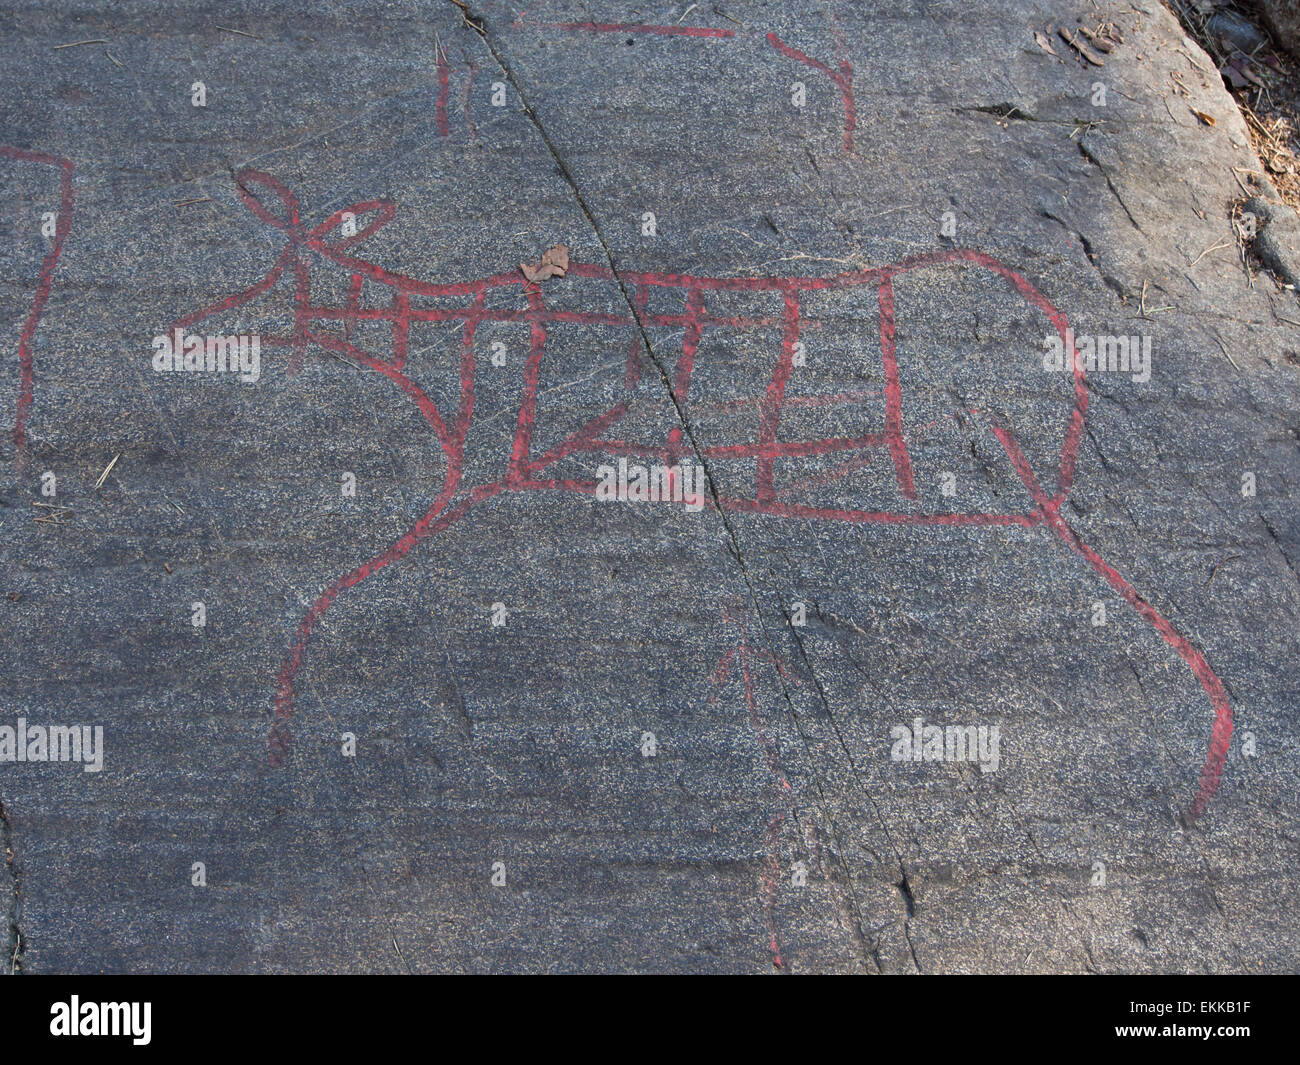 norwegian-petroglyphs-or-rock-engravings